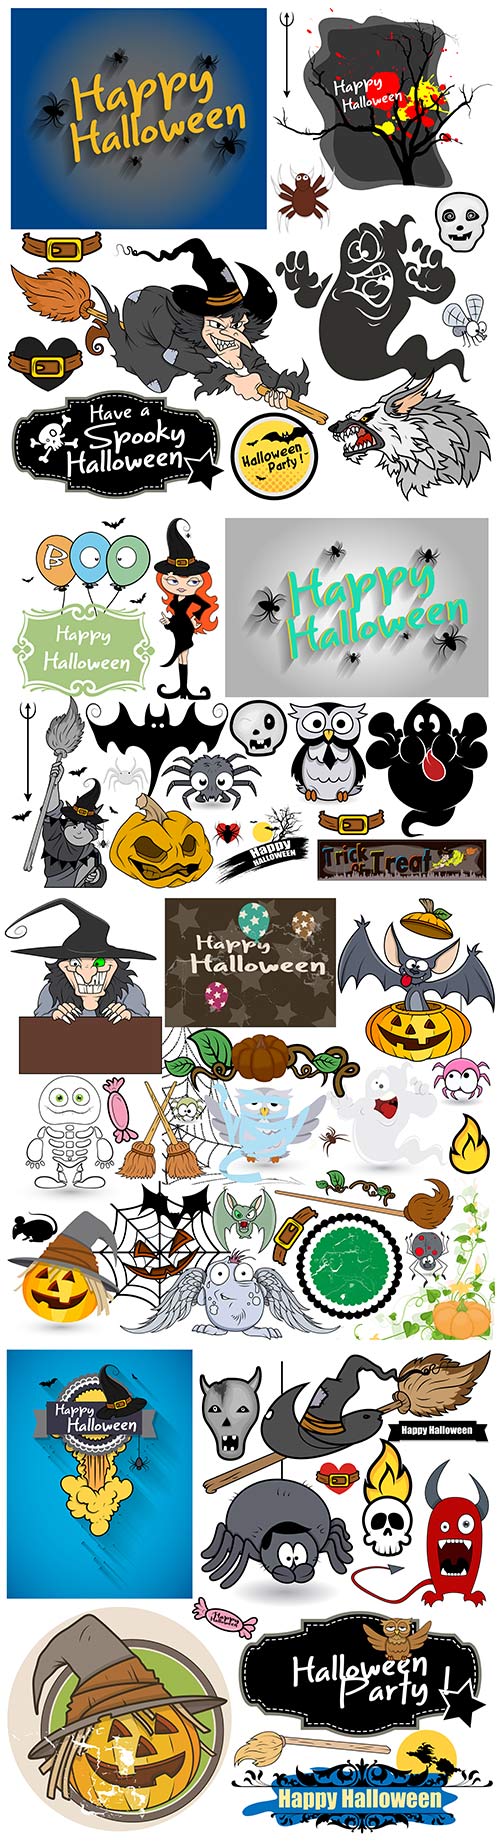 Halloween cartoon characters vector illustration # 5